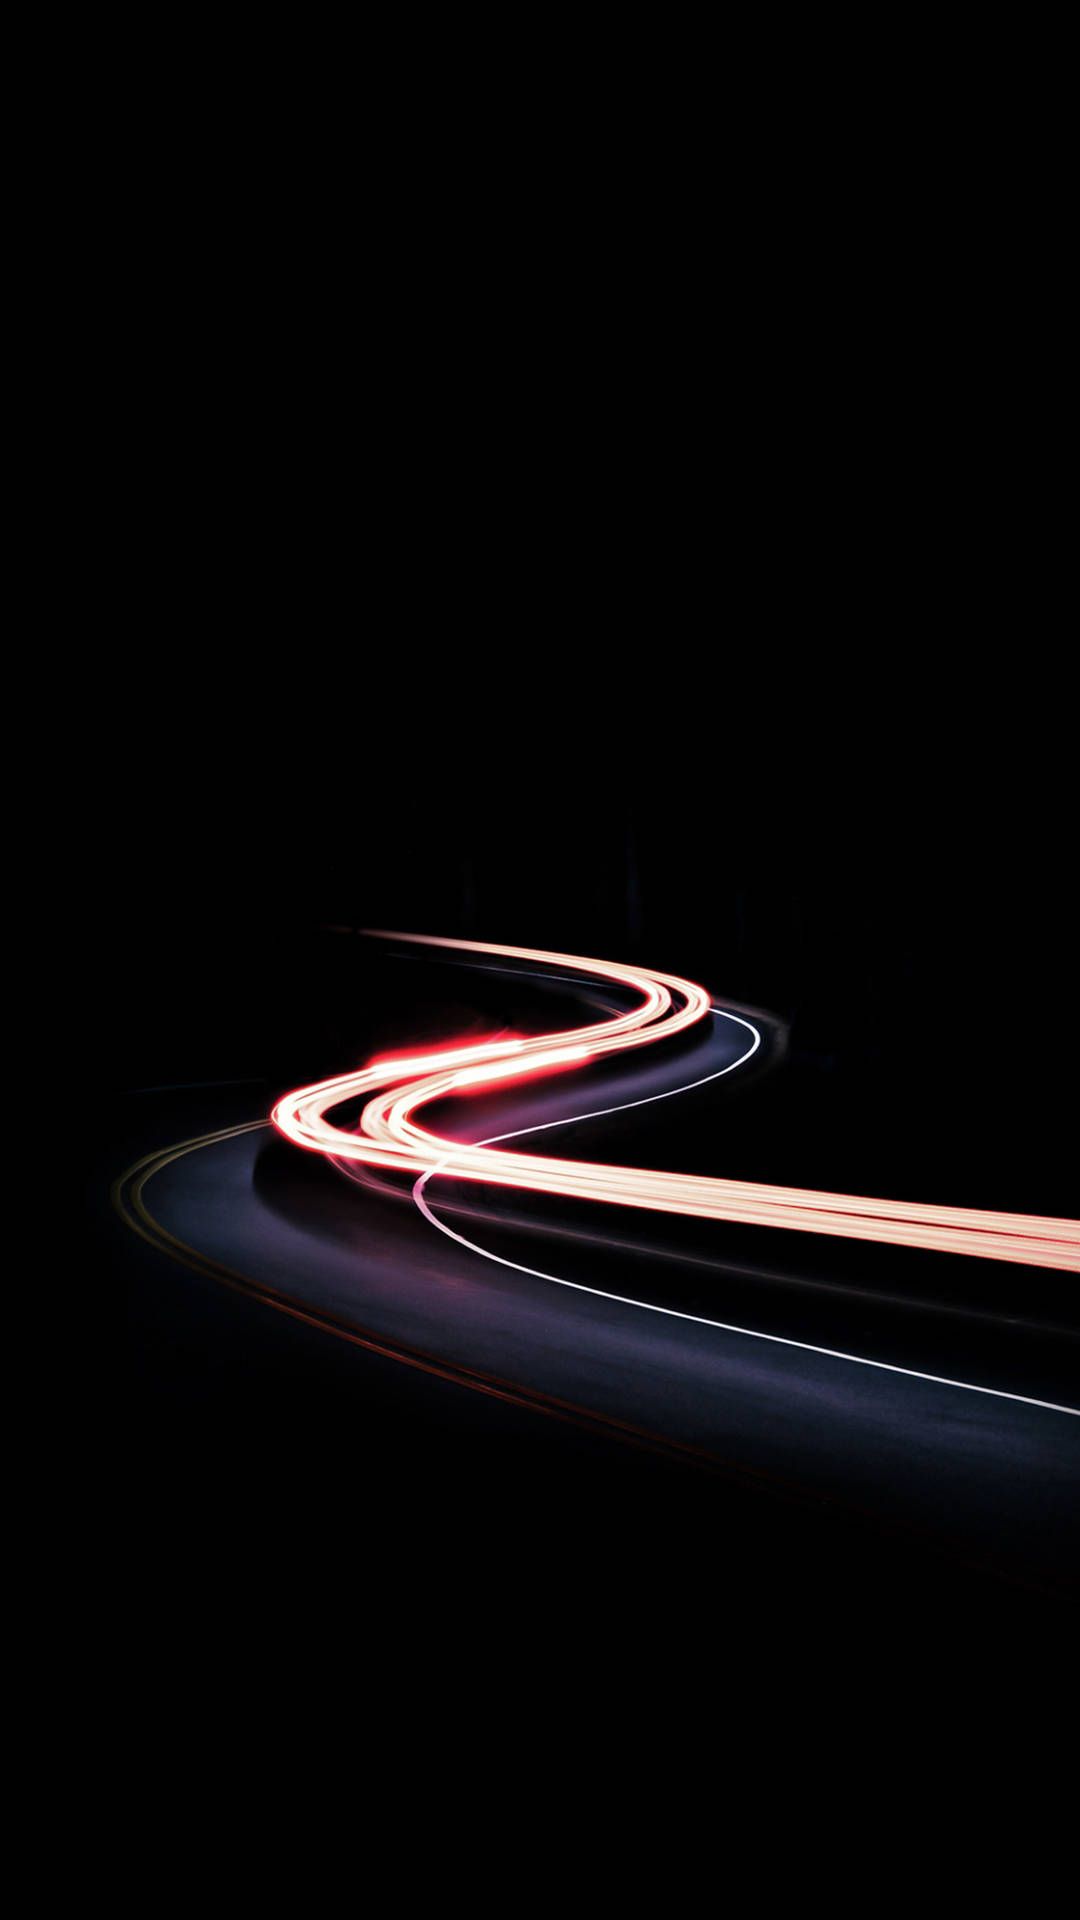 Illuminated Black Iphone Displaying Time-lapse Of Moving Car Background